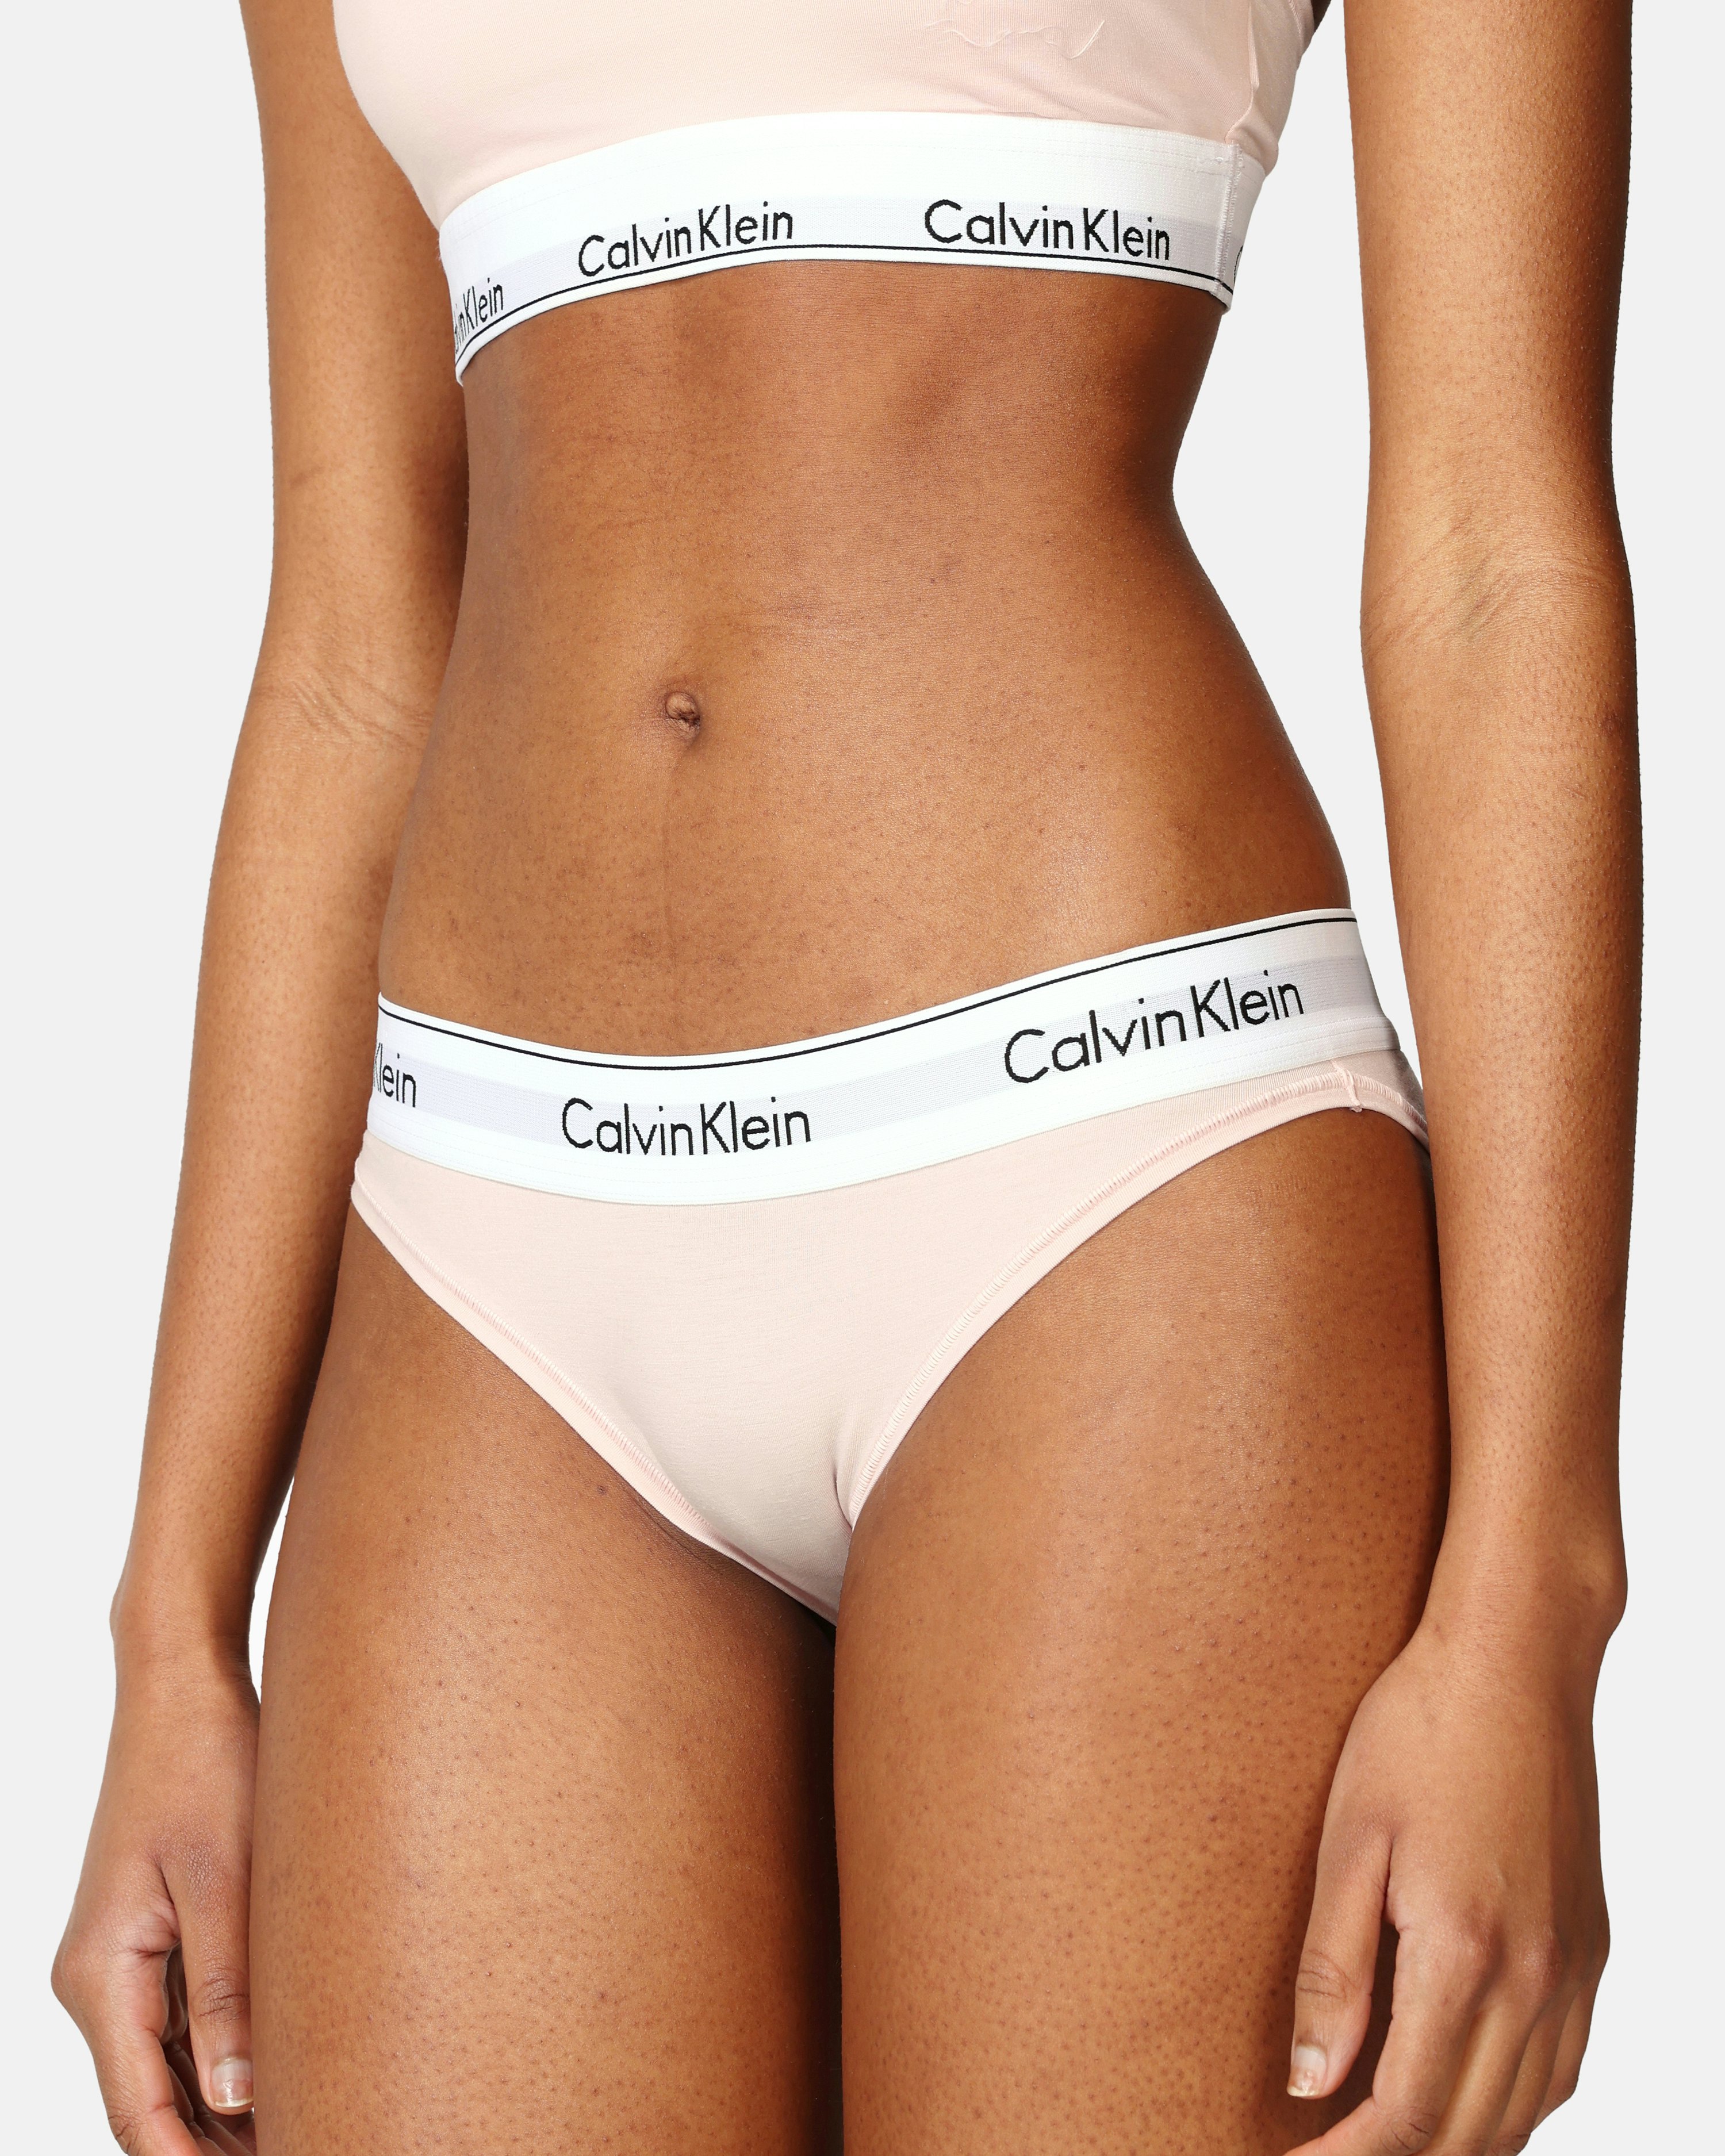 Calvin Klein Underwear Panties Sale Outlet